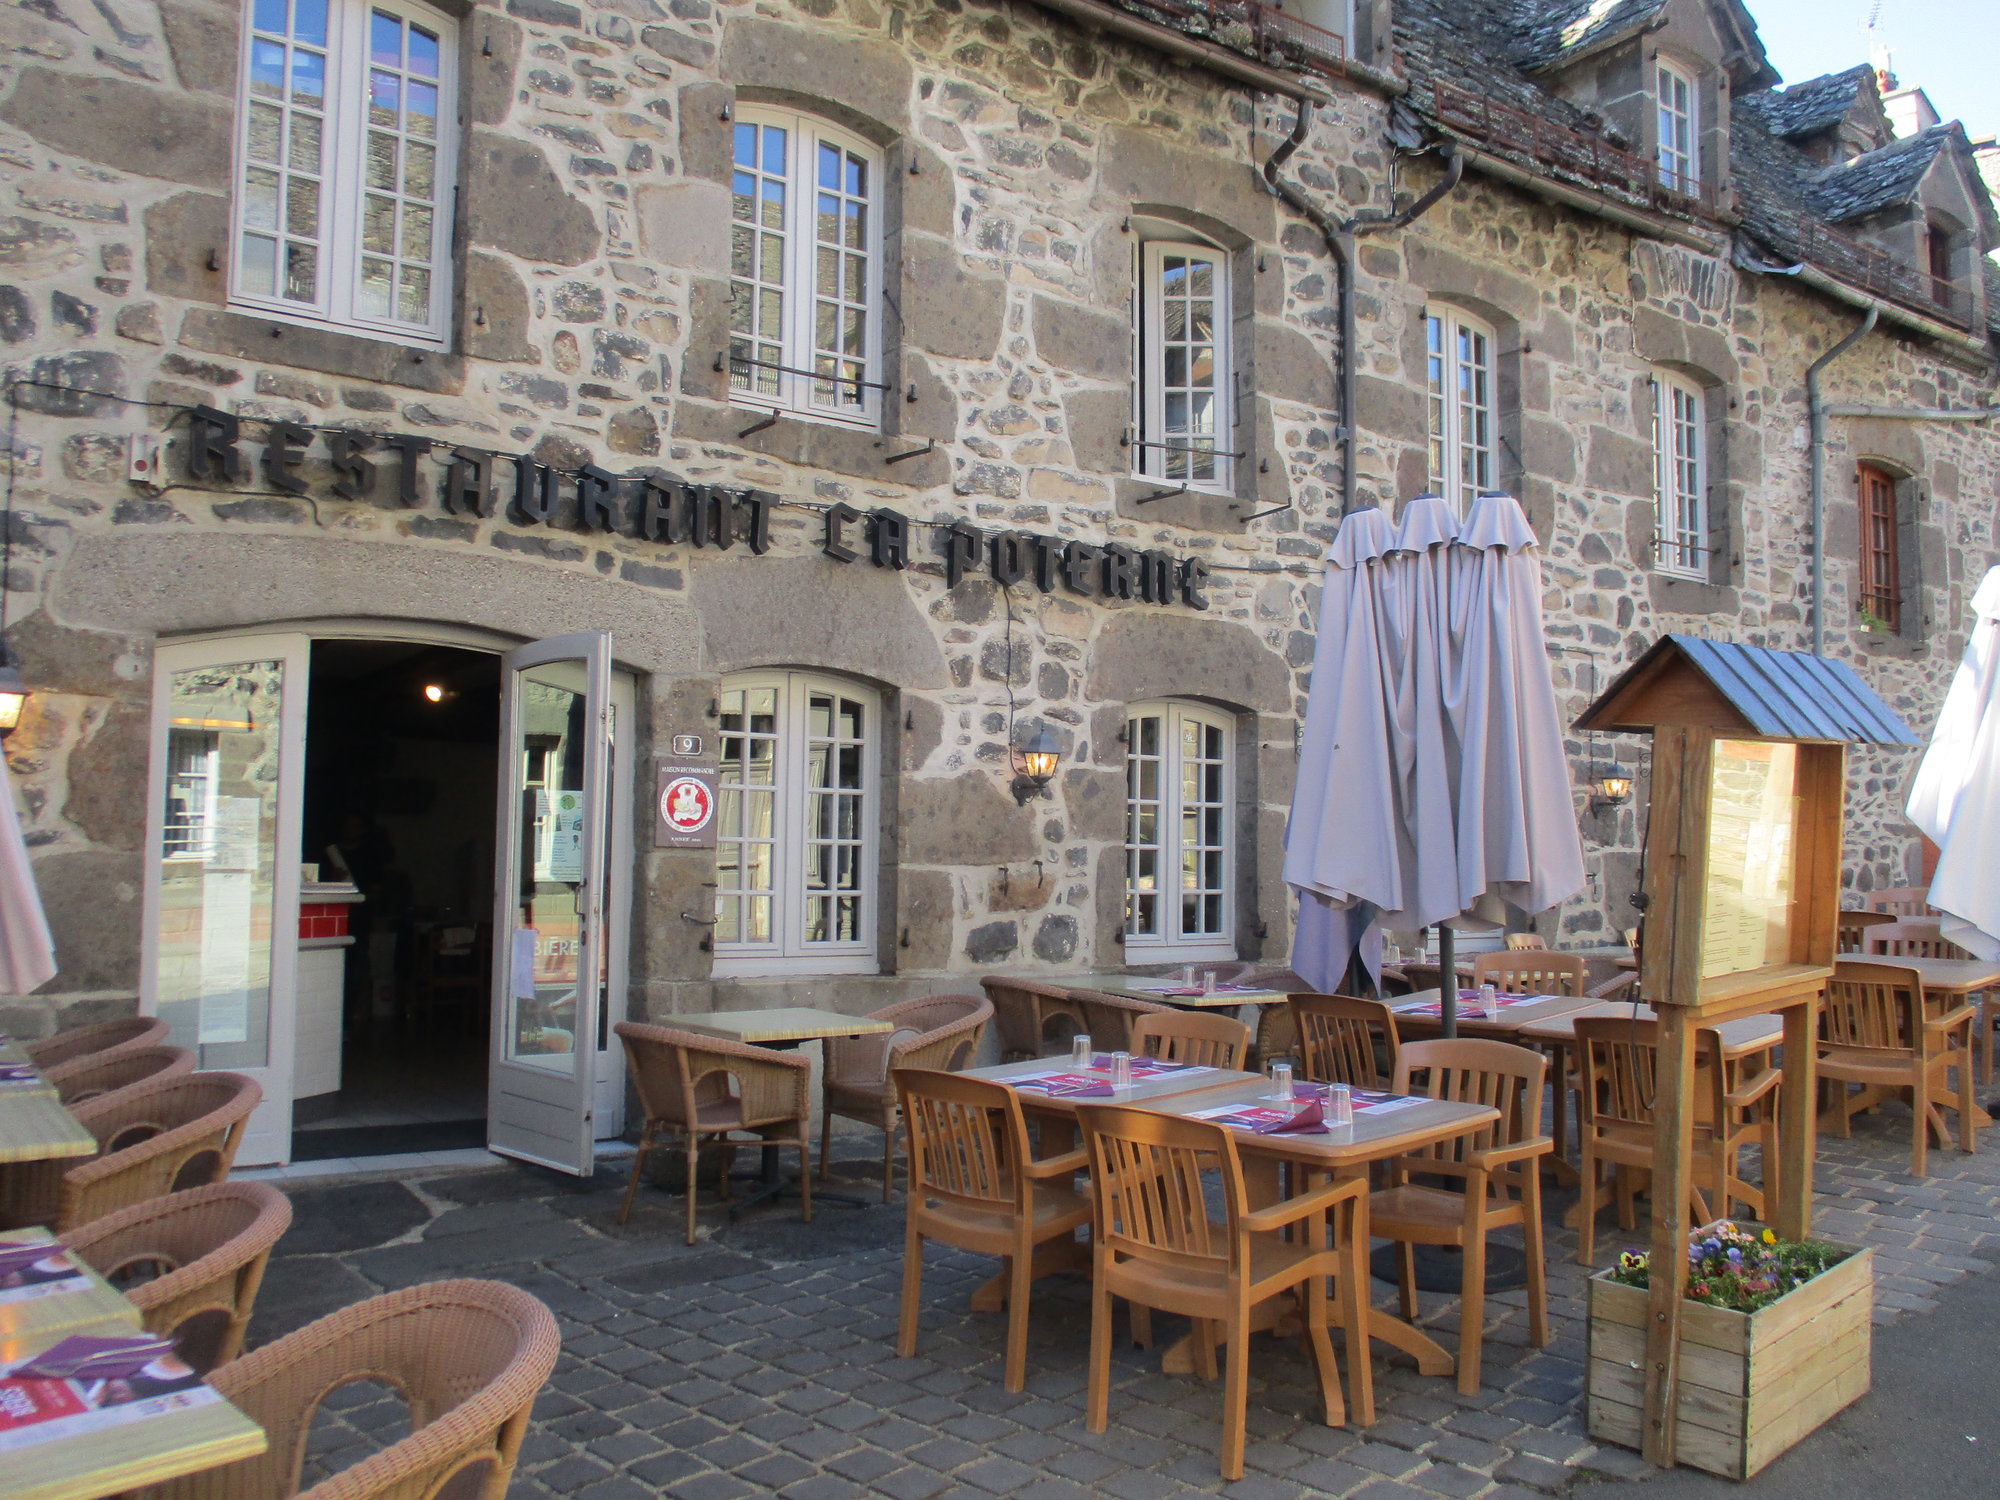 LA CANTINE, Orléans - 25 rue de la Poterne - Menu, Prix & Restaurant Avis -  Tripadvisor